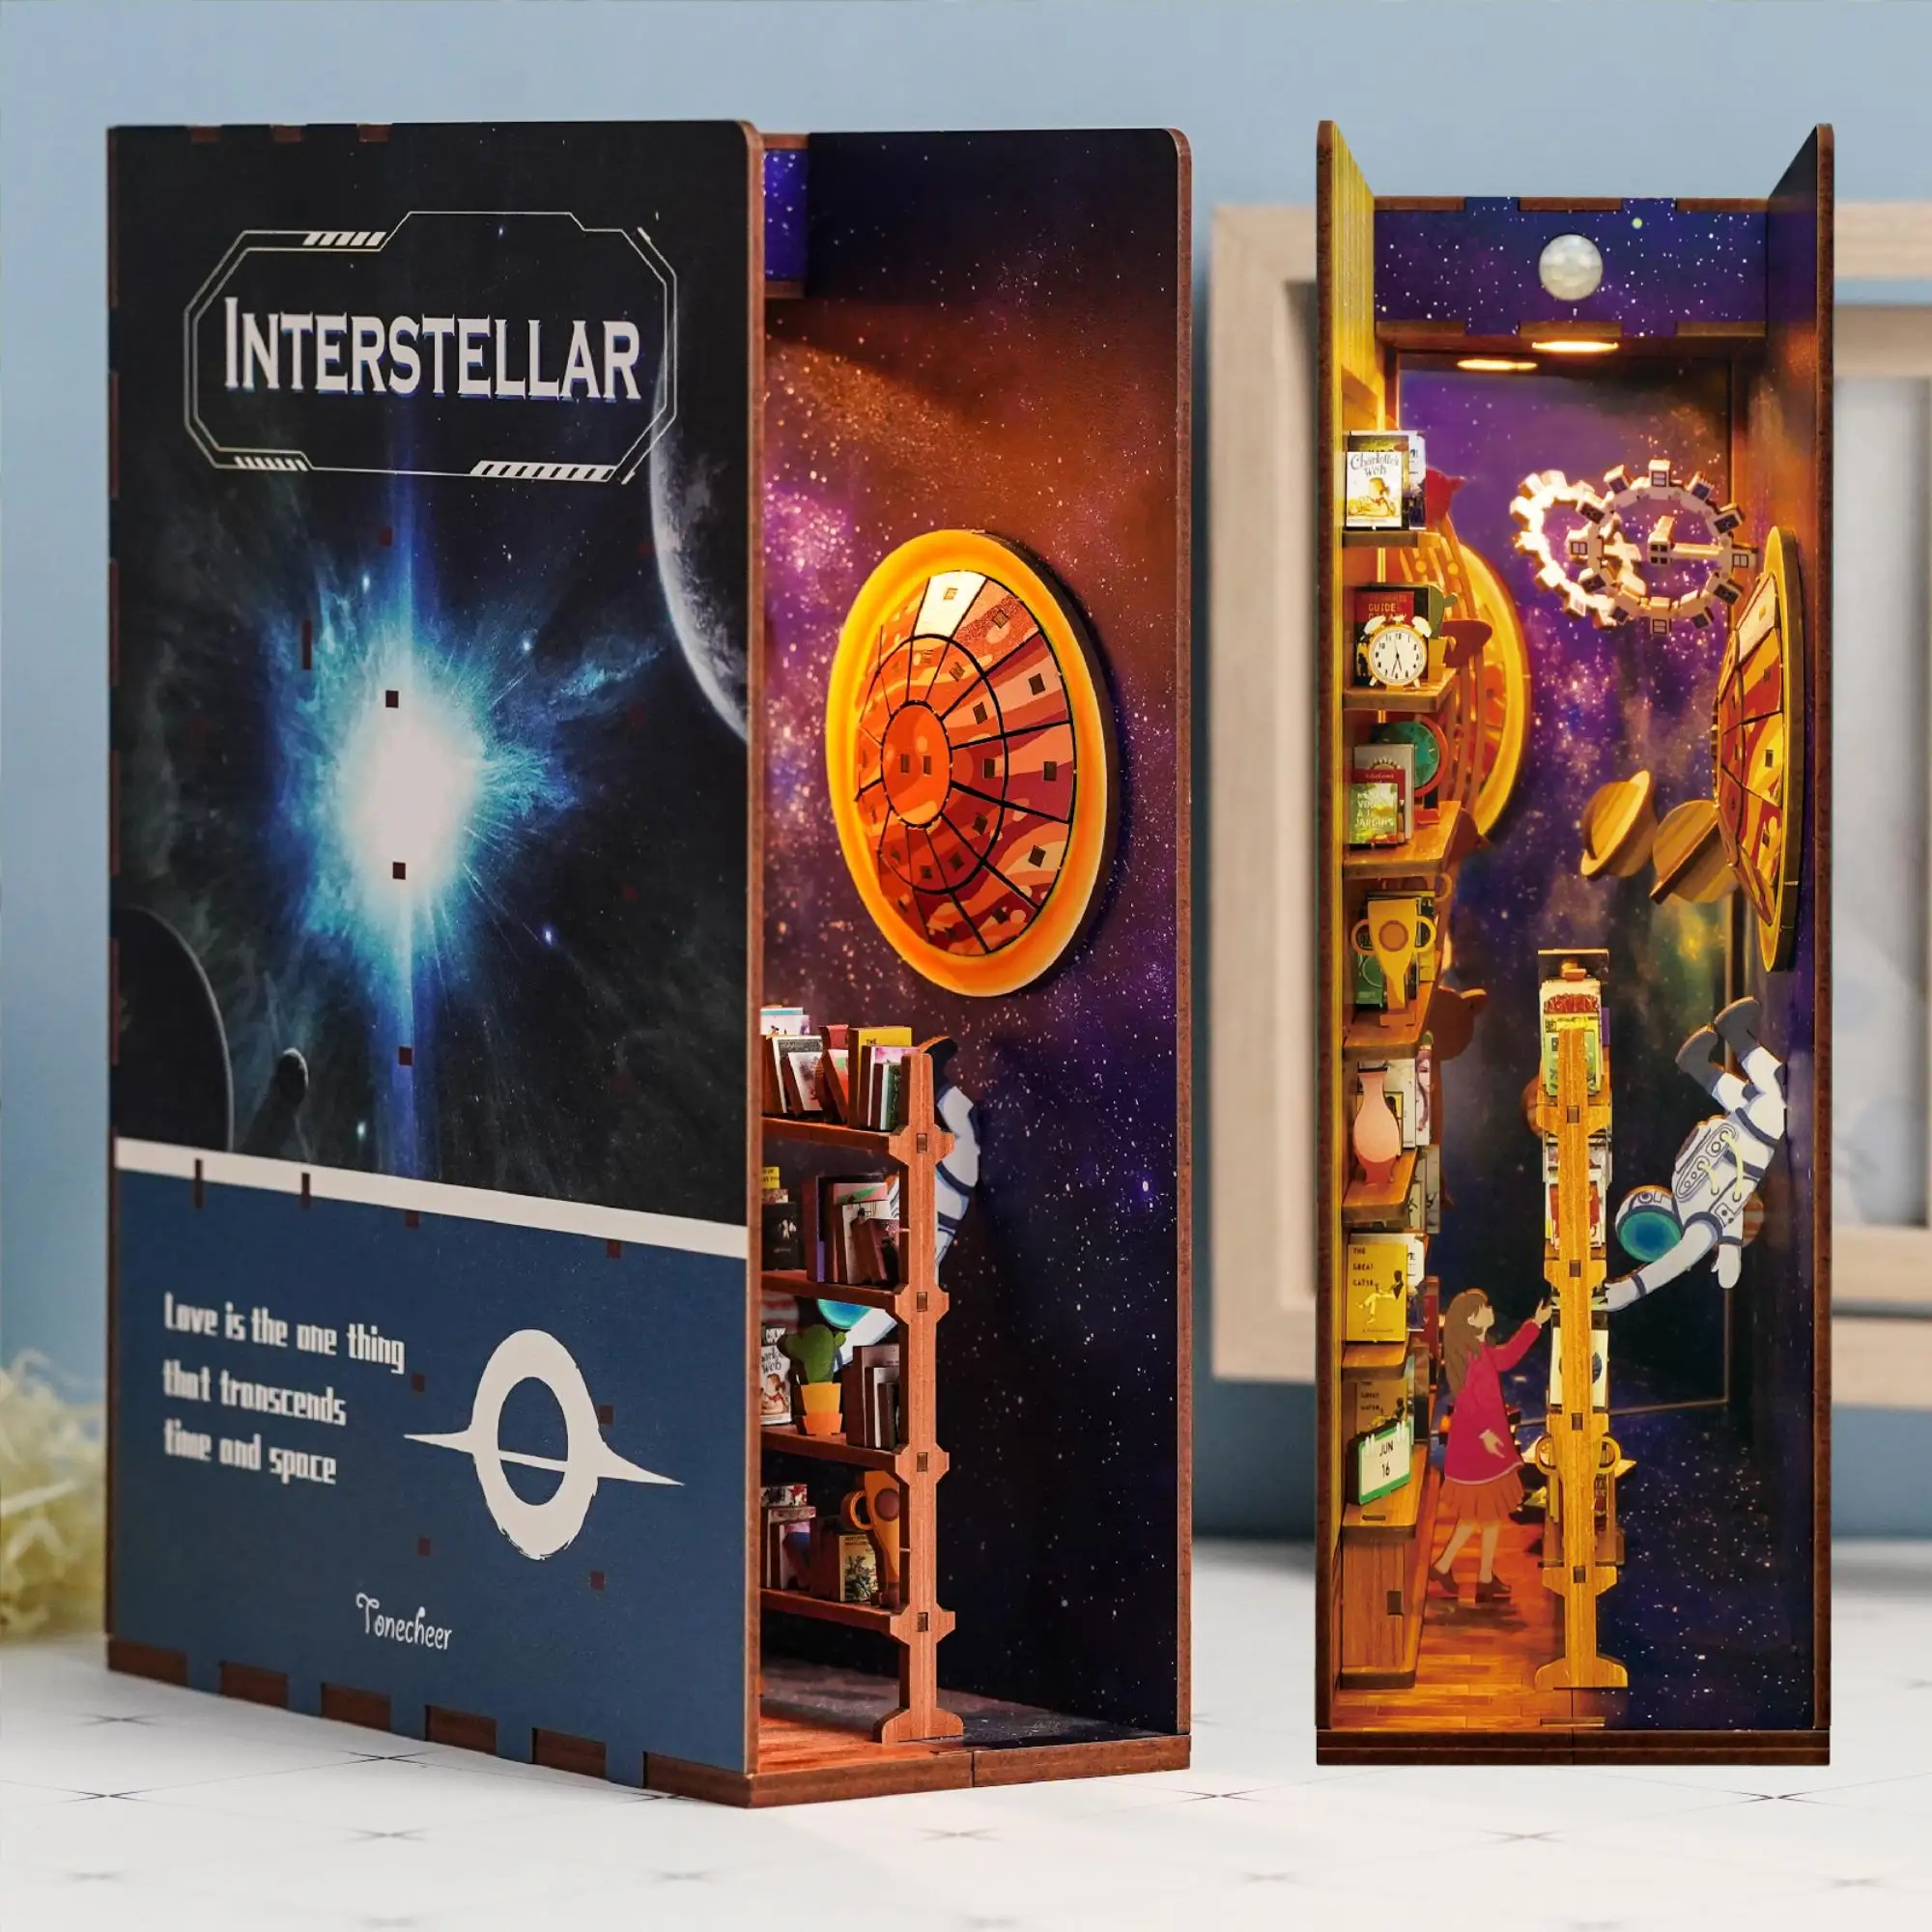 

Tonecheer Interstellar Diy Books Bookshelf Insert children's 3d wooden puzzle Book Nook with body sensor led light